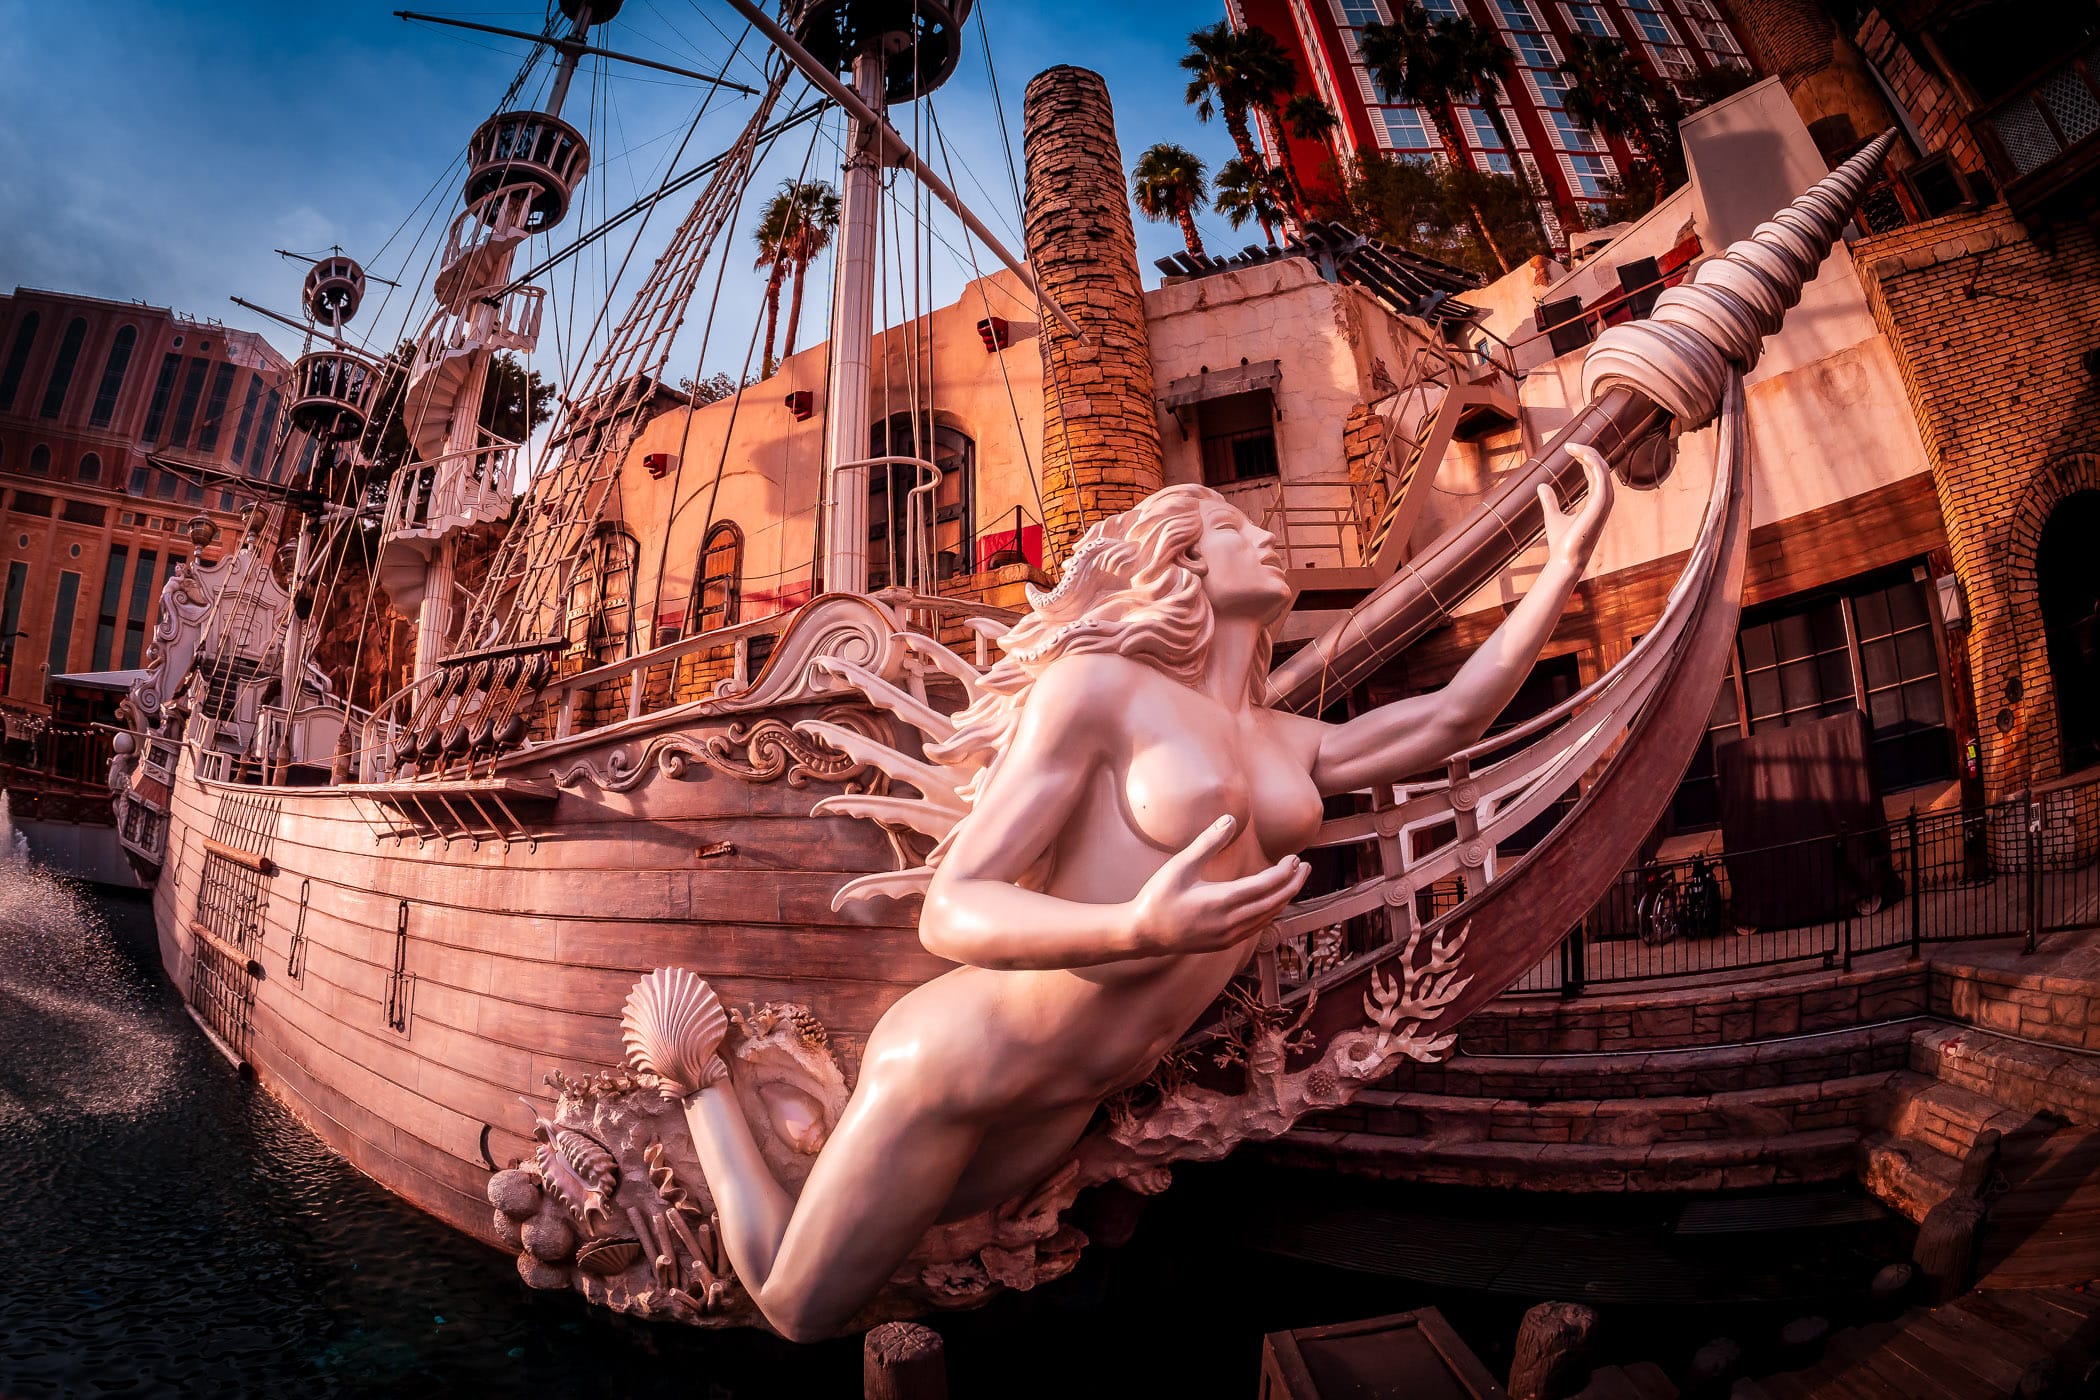 Detail of the pirate ship at Las Vegas' Treasure Island Hotel & Casino.